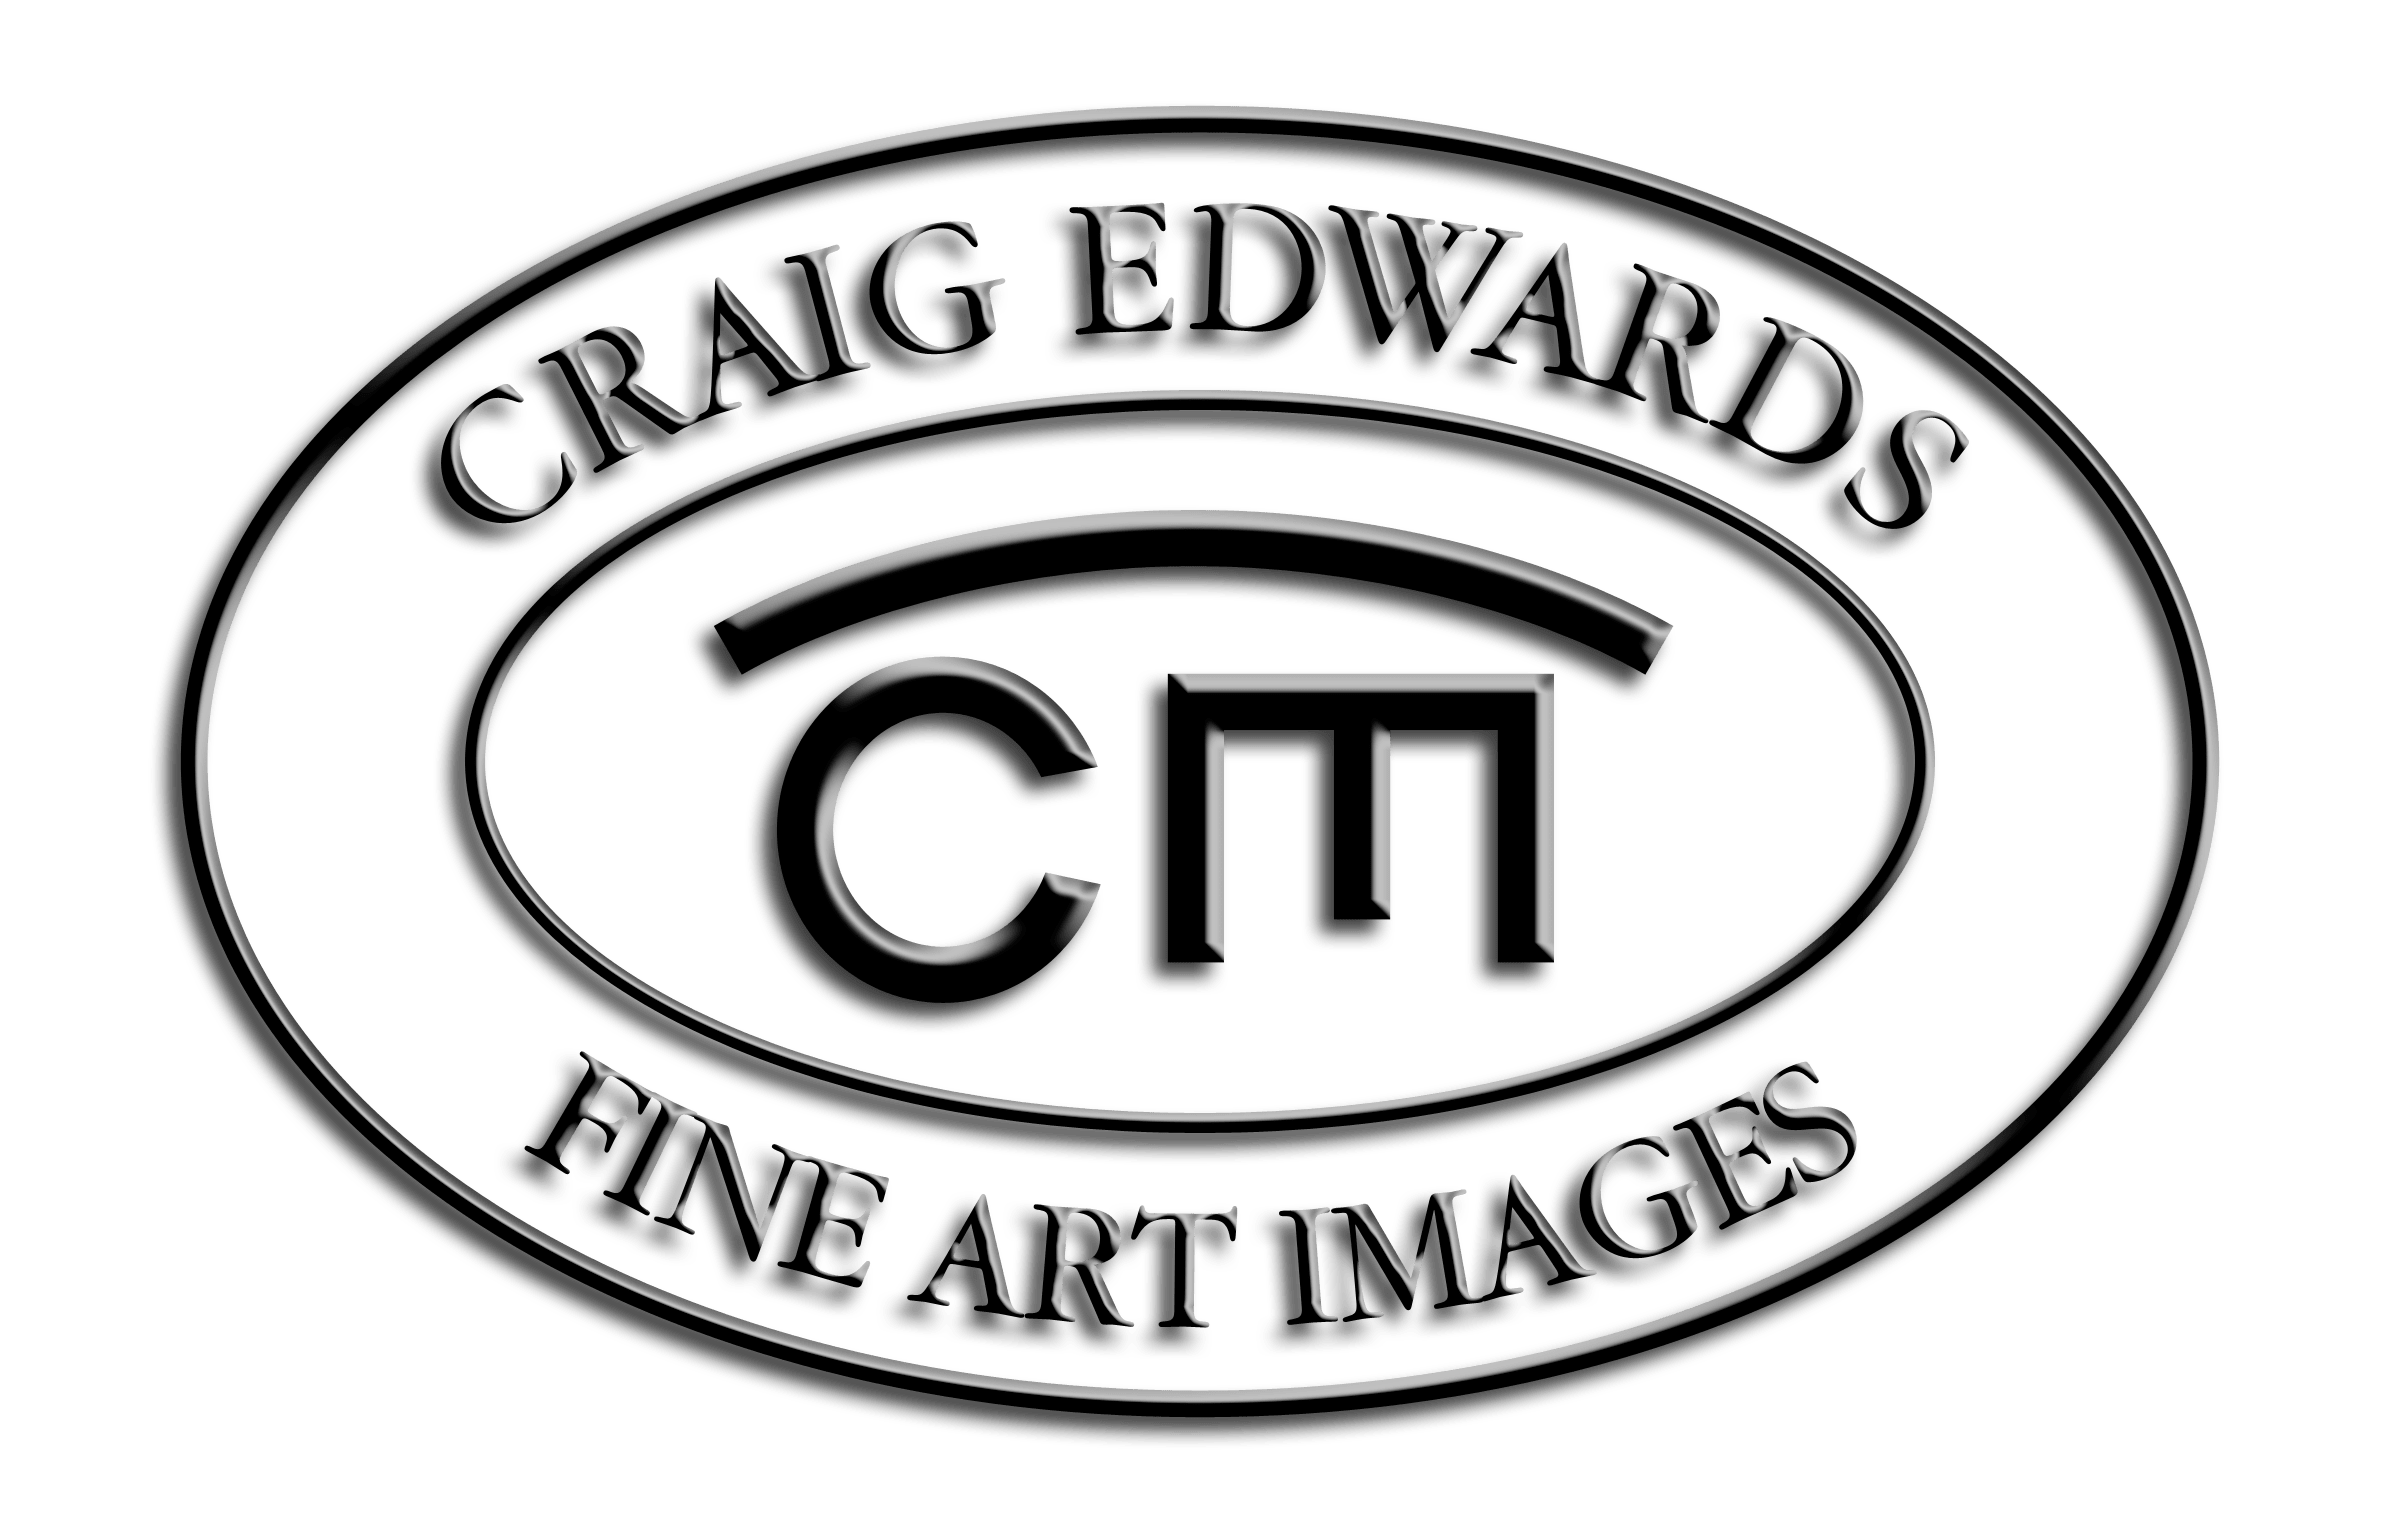 Craig Edwards Fine Art